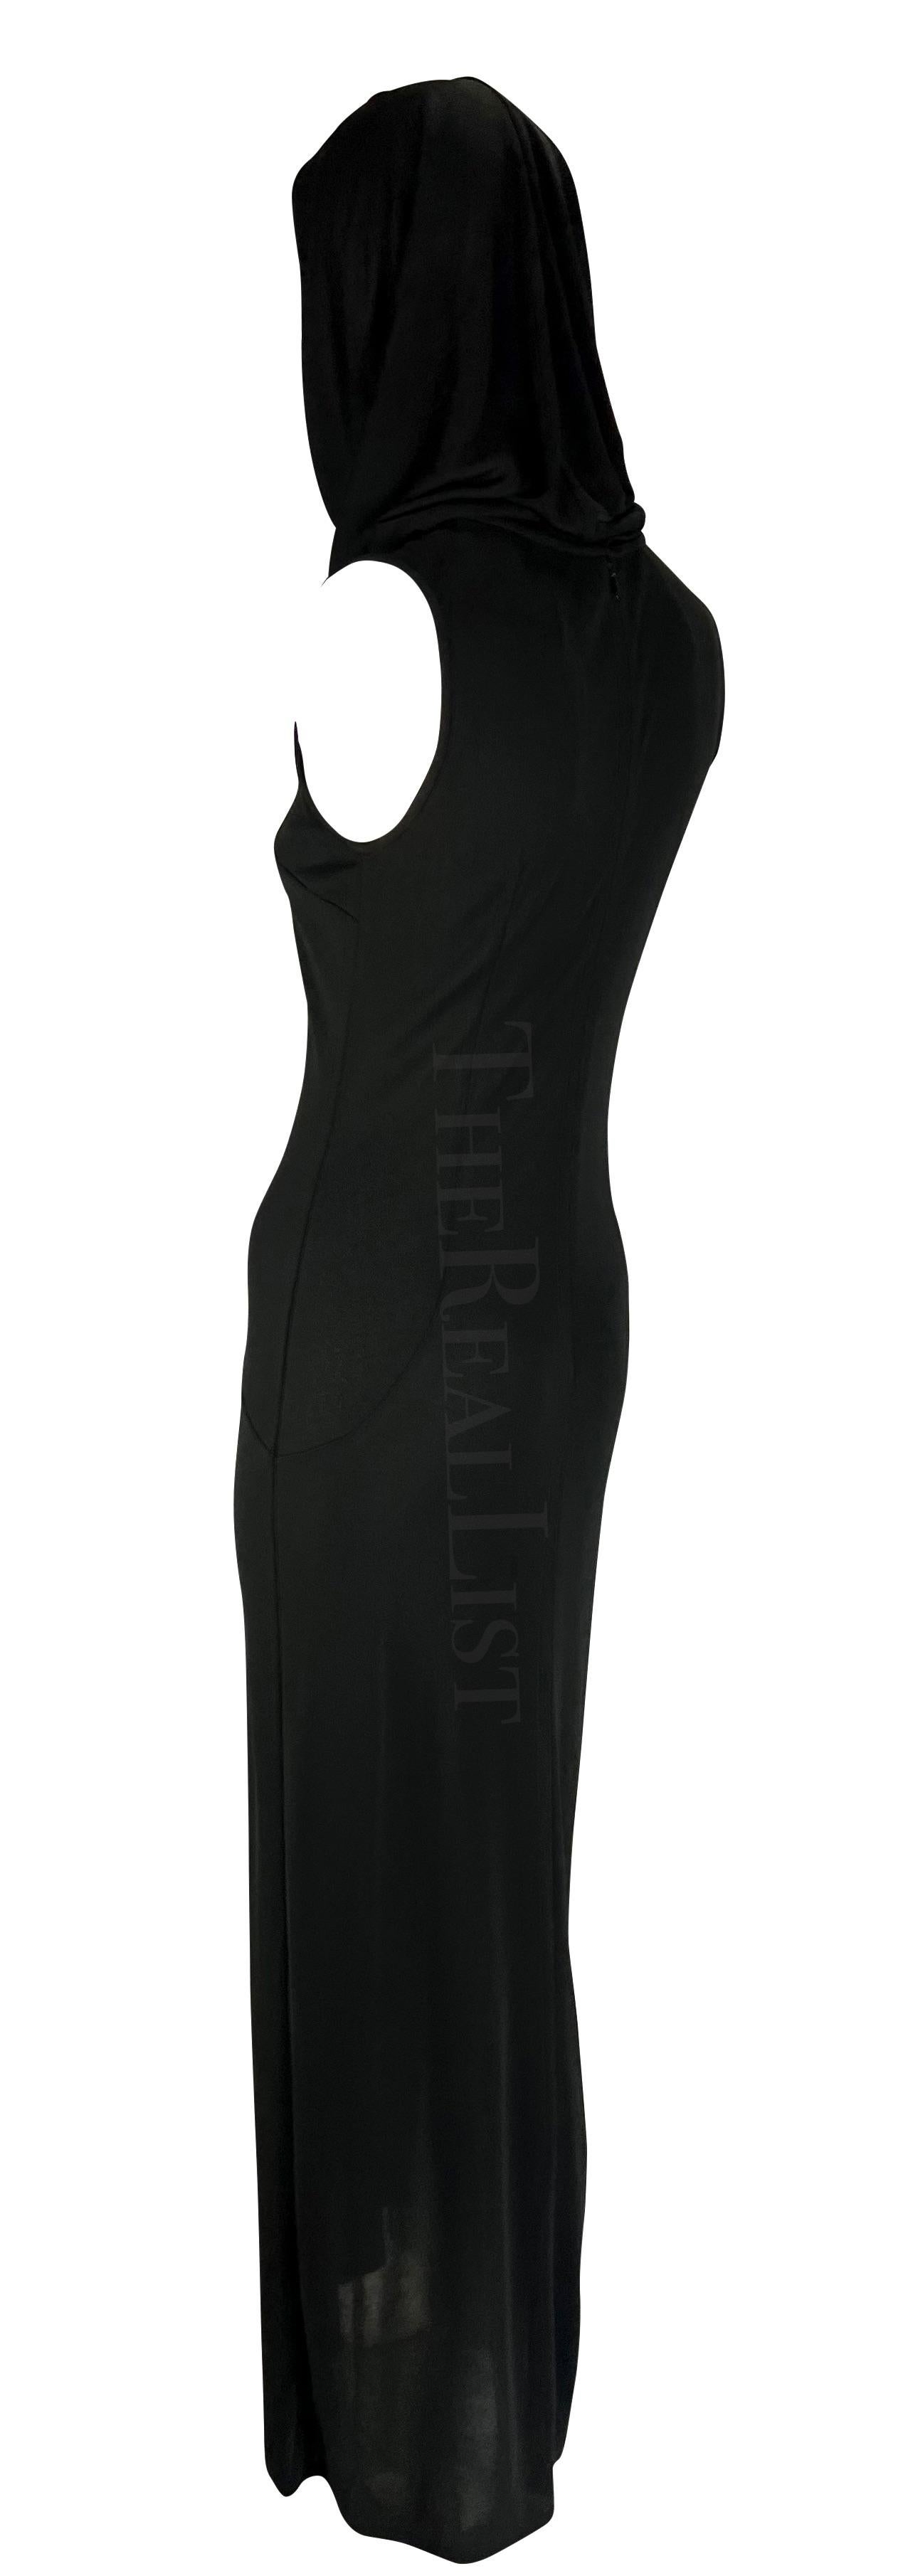 S/S 1996 Dolce & Gabbana Runway Hooded Stretch Black High Slit Dress For Sale 2